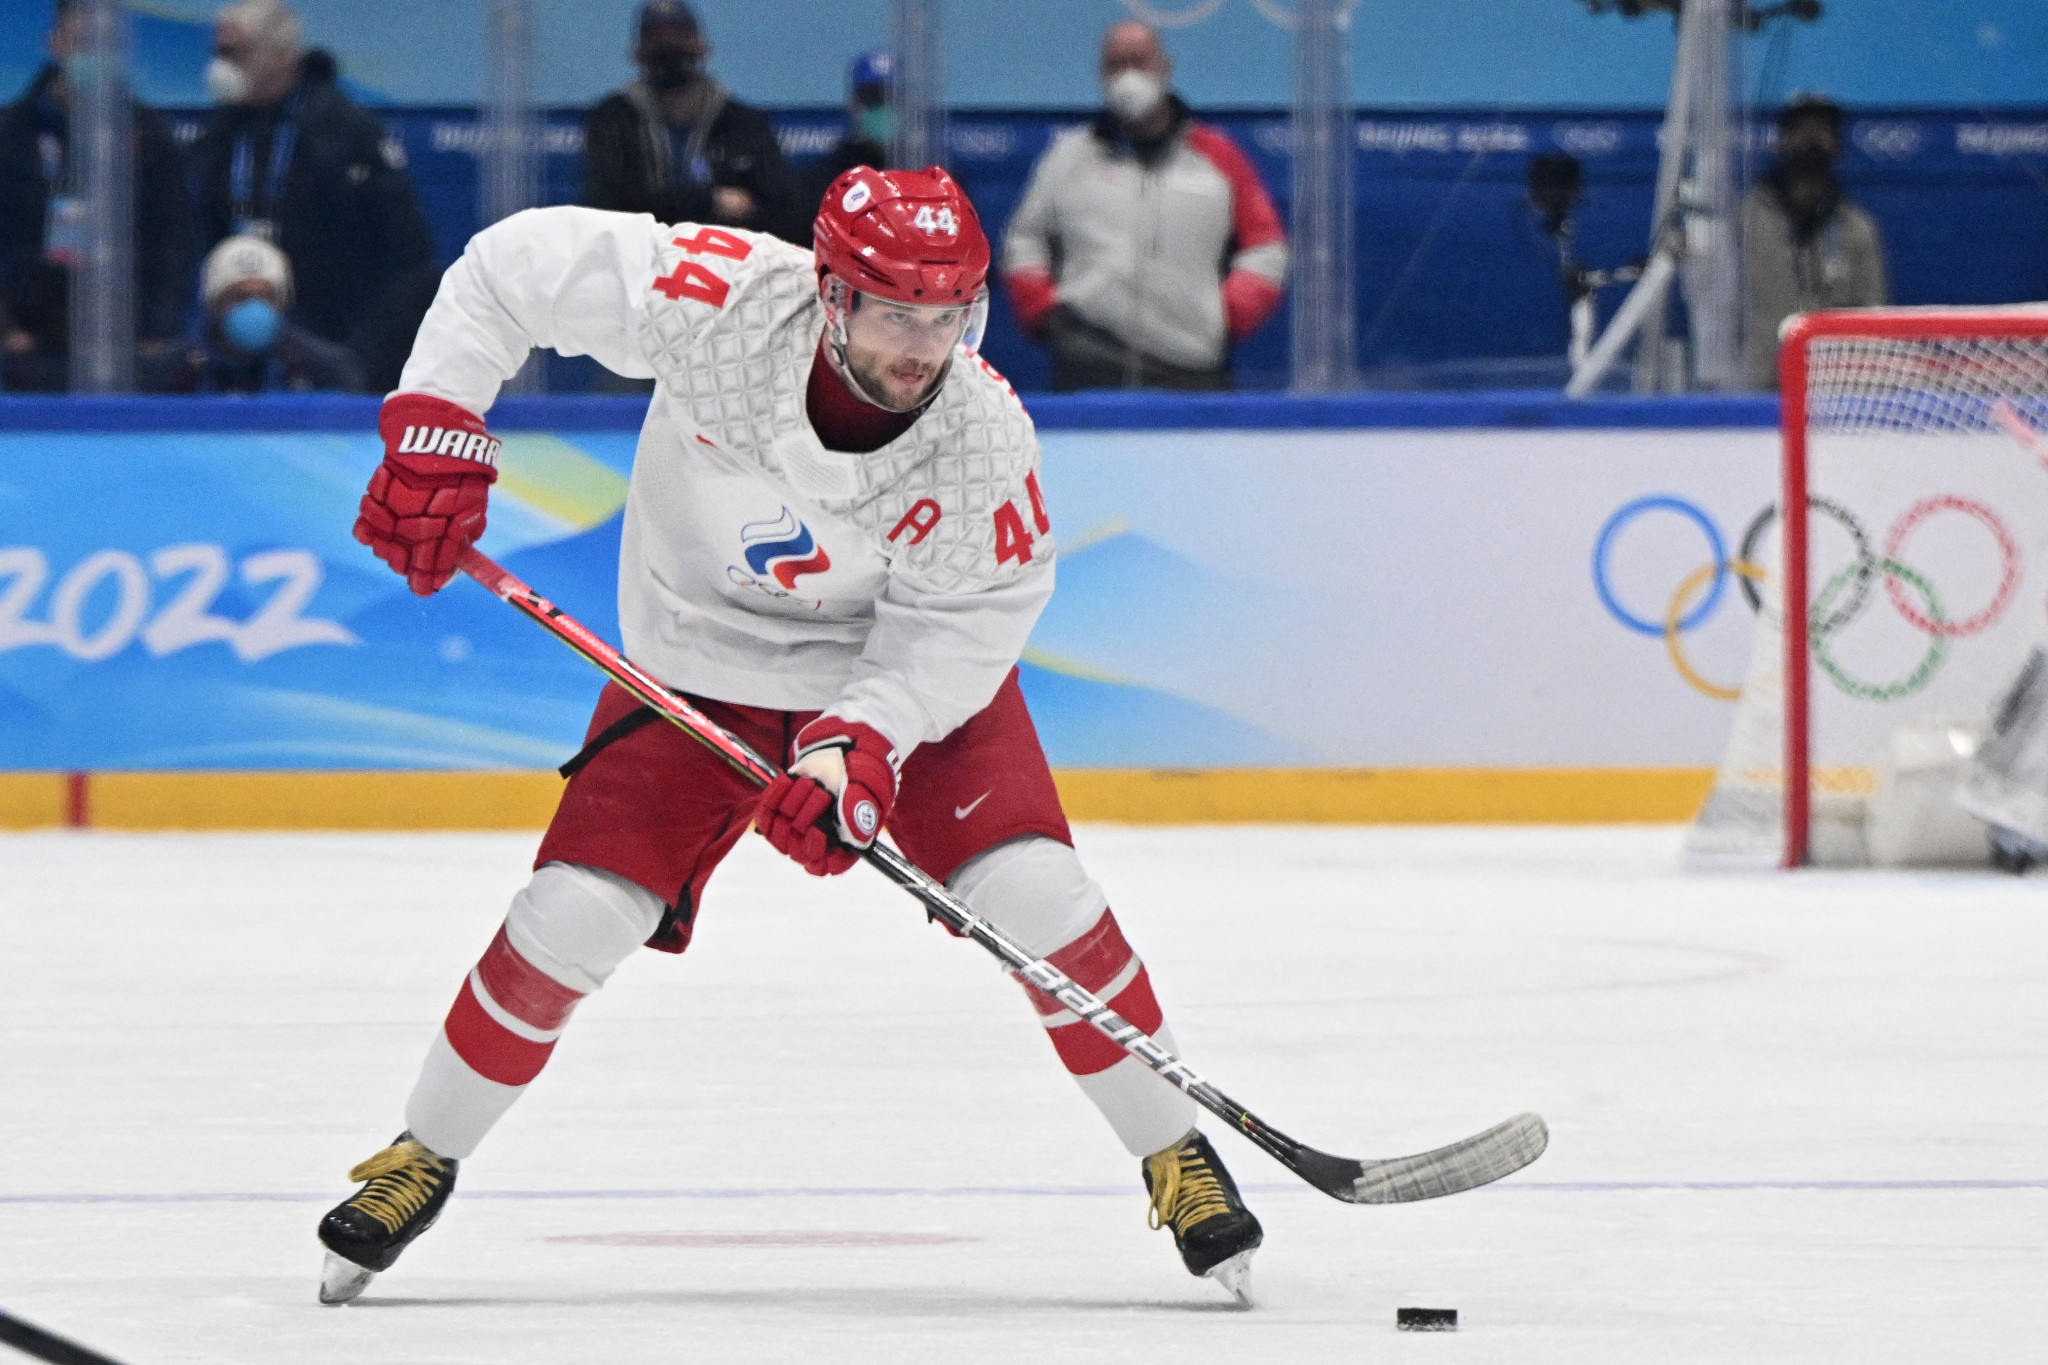 IIHF Congress agenda not to include Russian membership status, says President